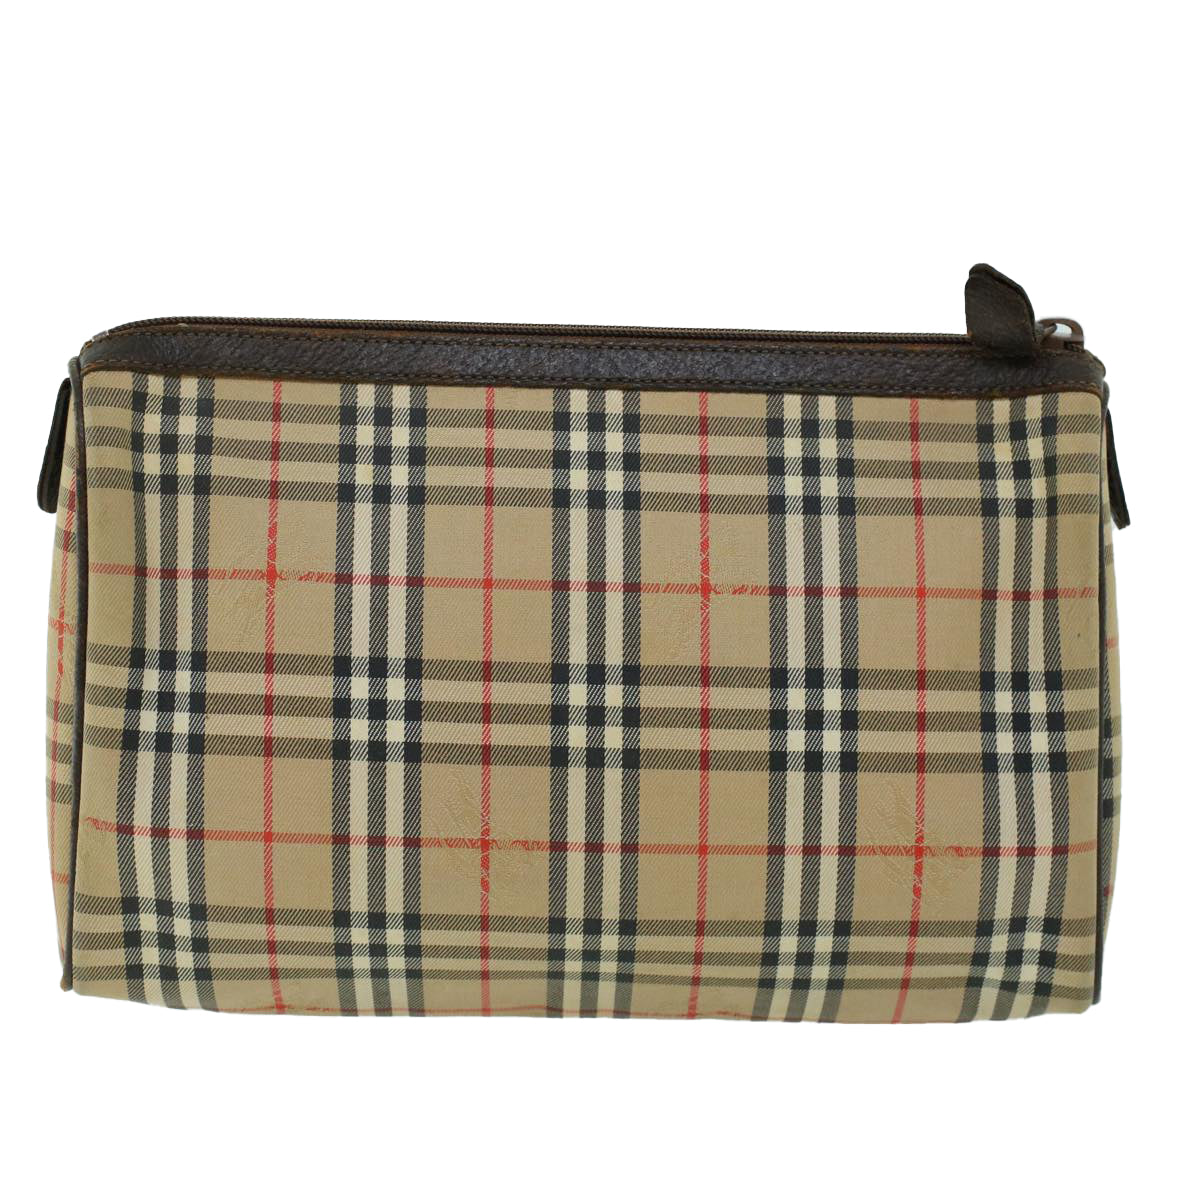 Burberrys Nova Check Clutch Bag Canvas Leather Beige Brown Auth 53792 - 0